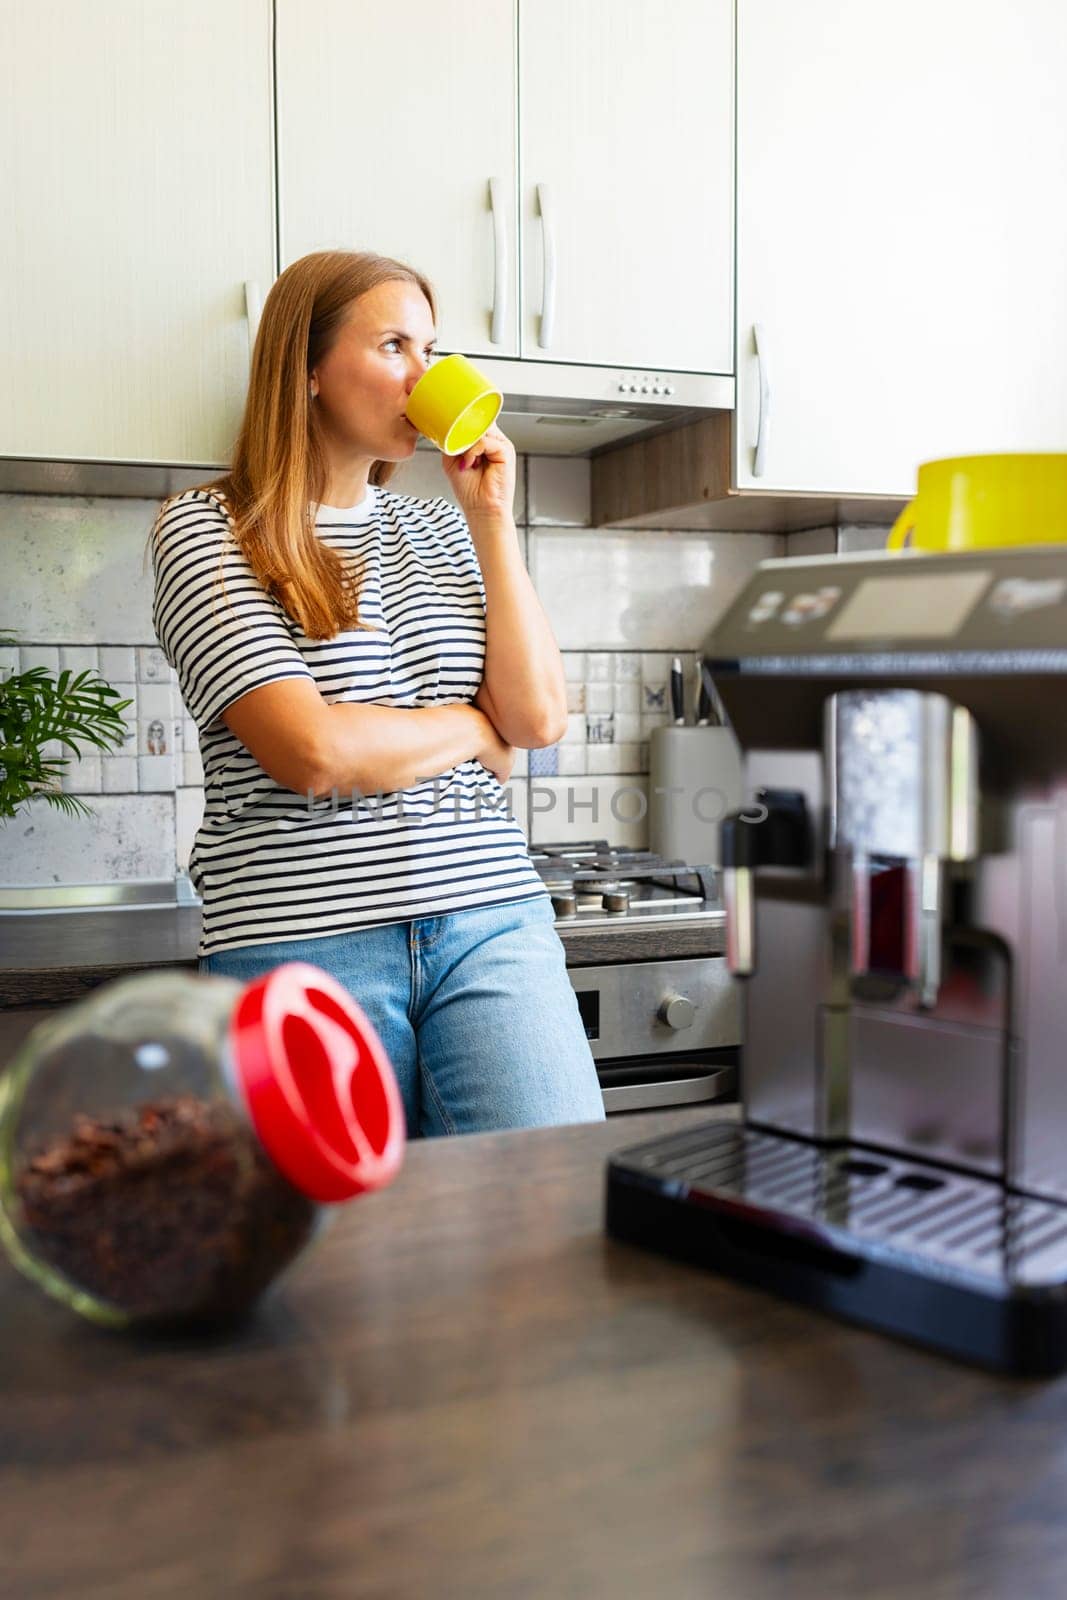 Young woman enjoying freshly prepared aromatic coffee near modern coffee machine in kitchen.